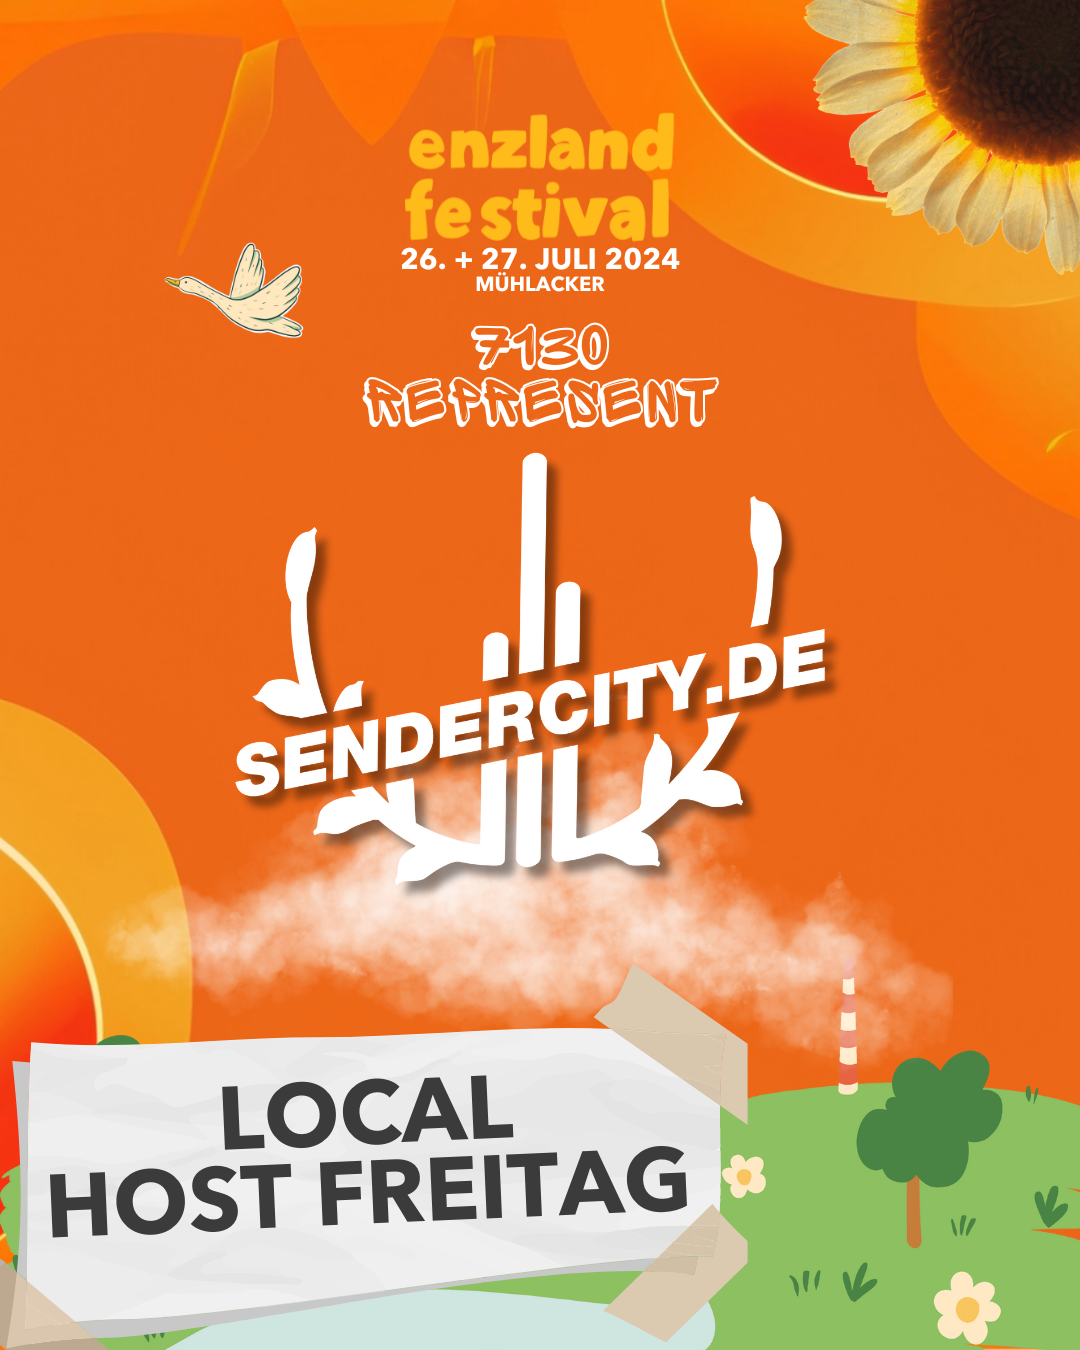 Sender City enzland festival 2024 Mühlacker